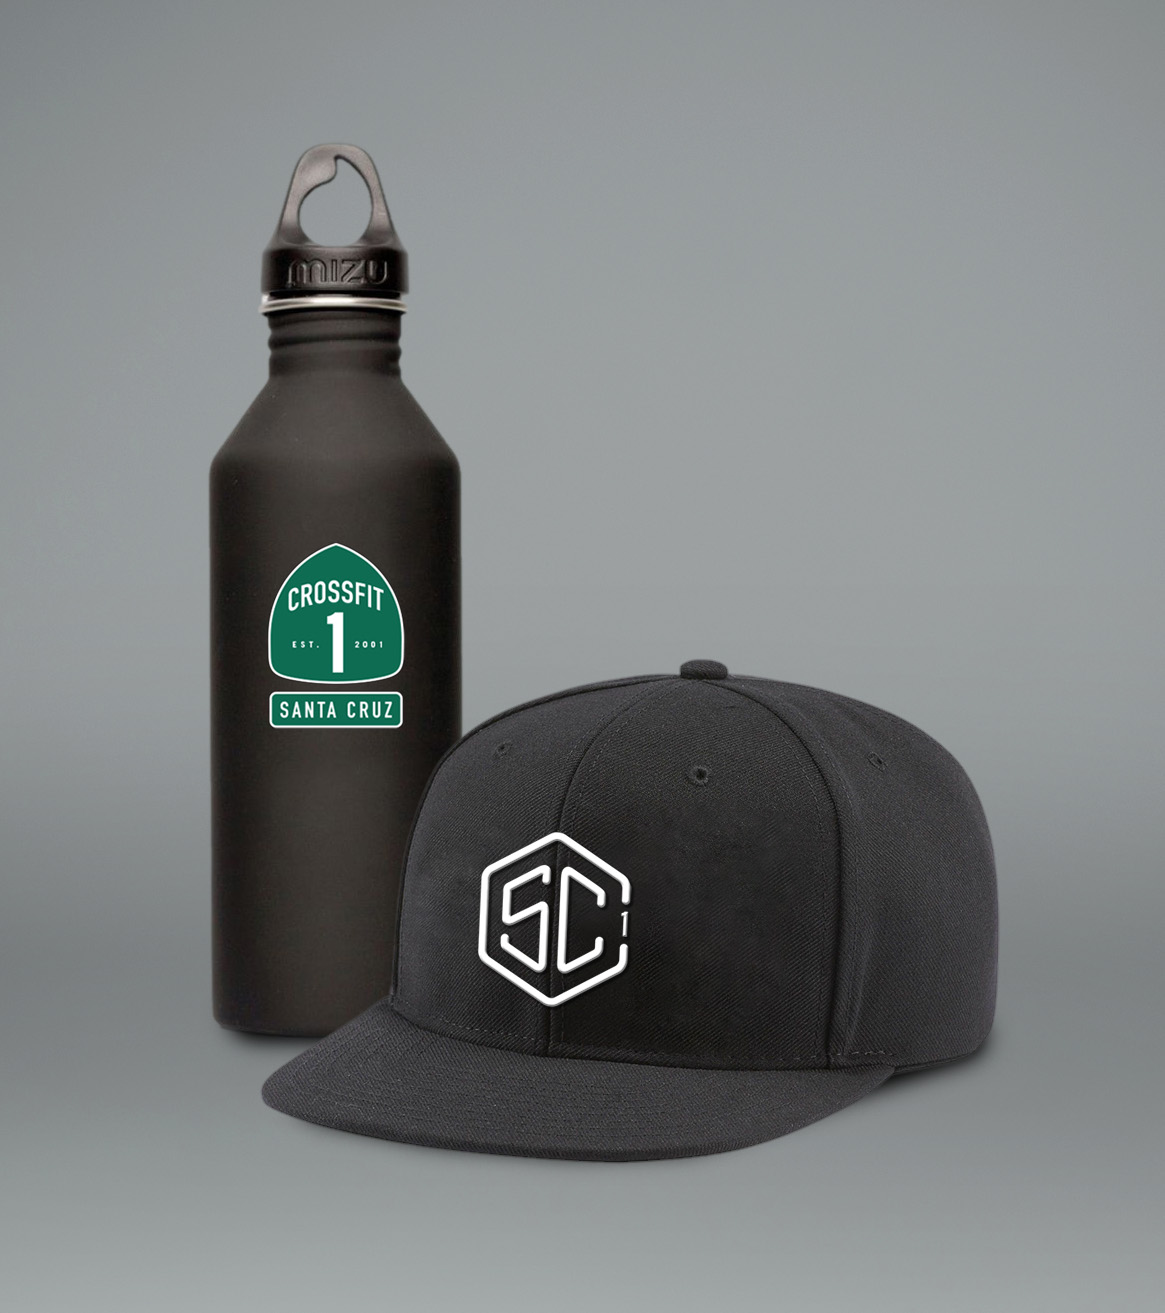 Crossfit Santa Cruz Hat and Water Bottle